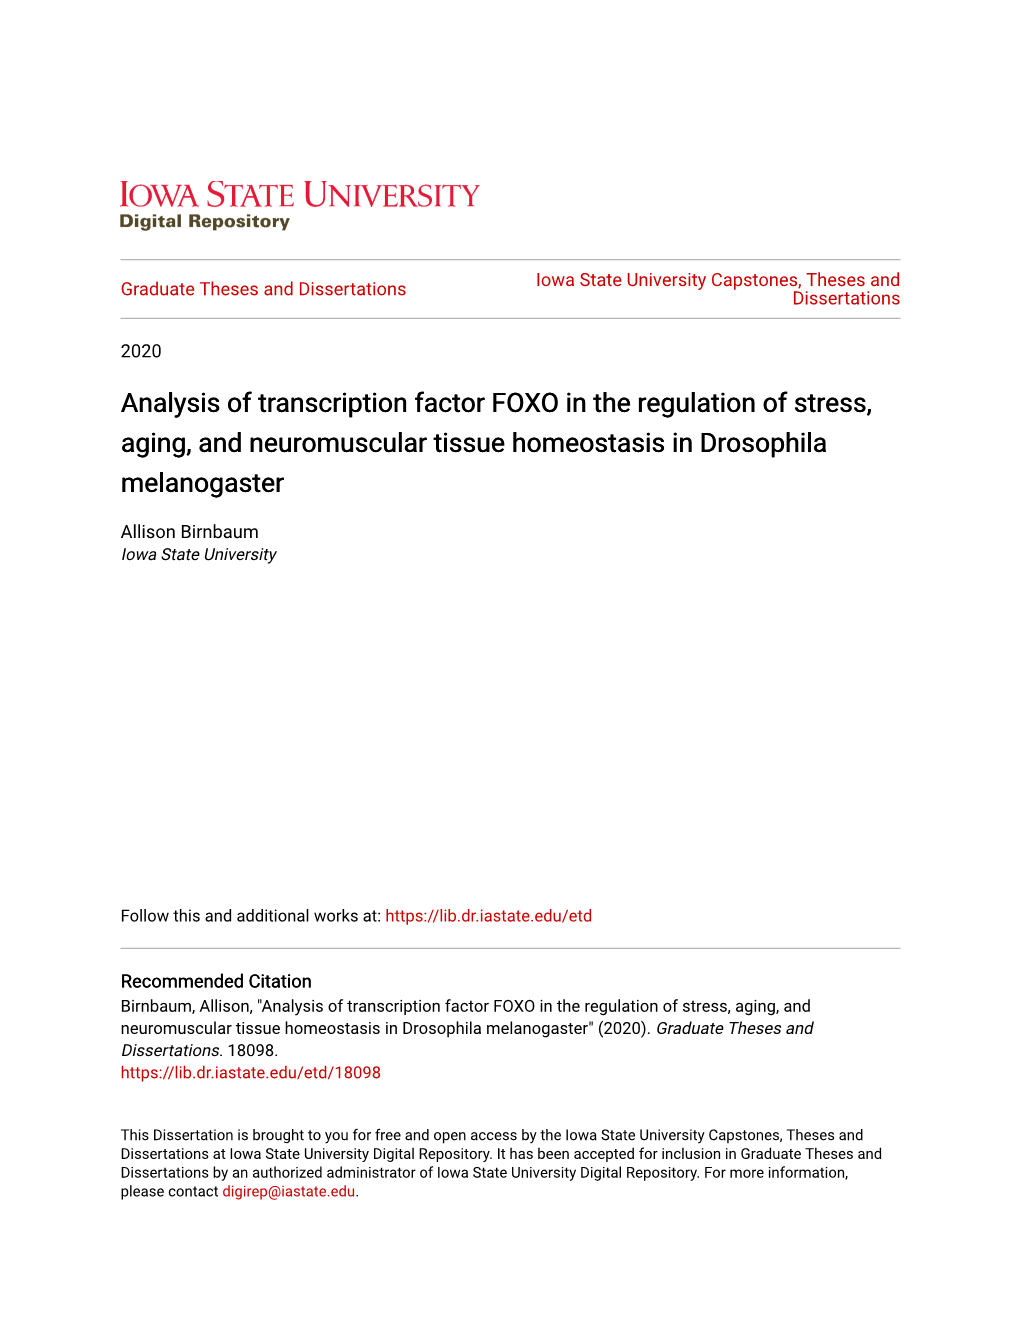 Analysis of Transcription Factor FOXO in the Regulation of Stress, Aging, and Neuromuscular Tissue Homeostasis in Drosophila Melanogaster